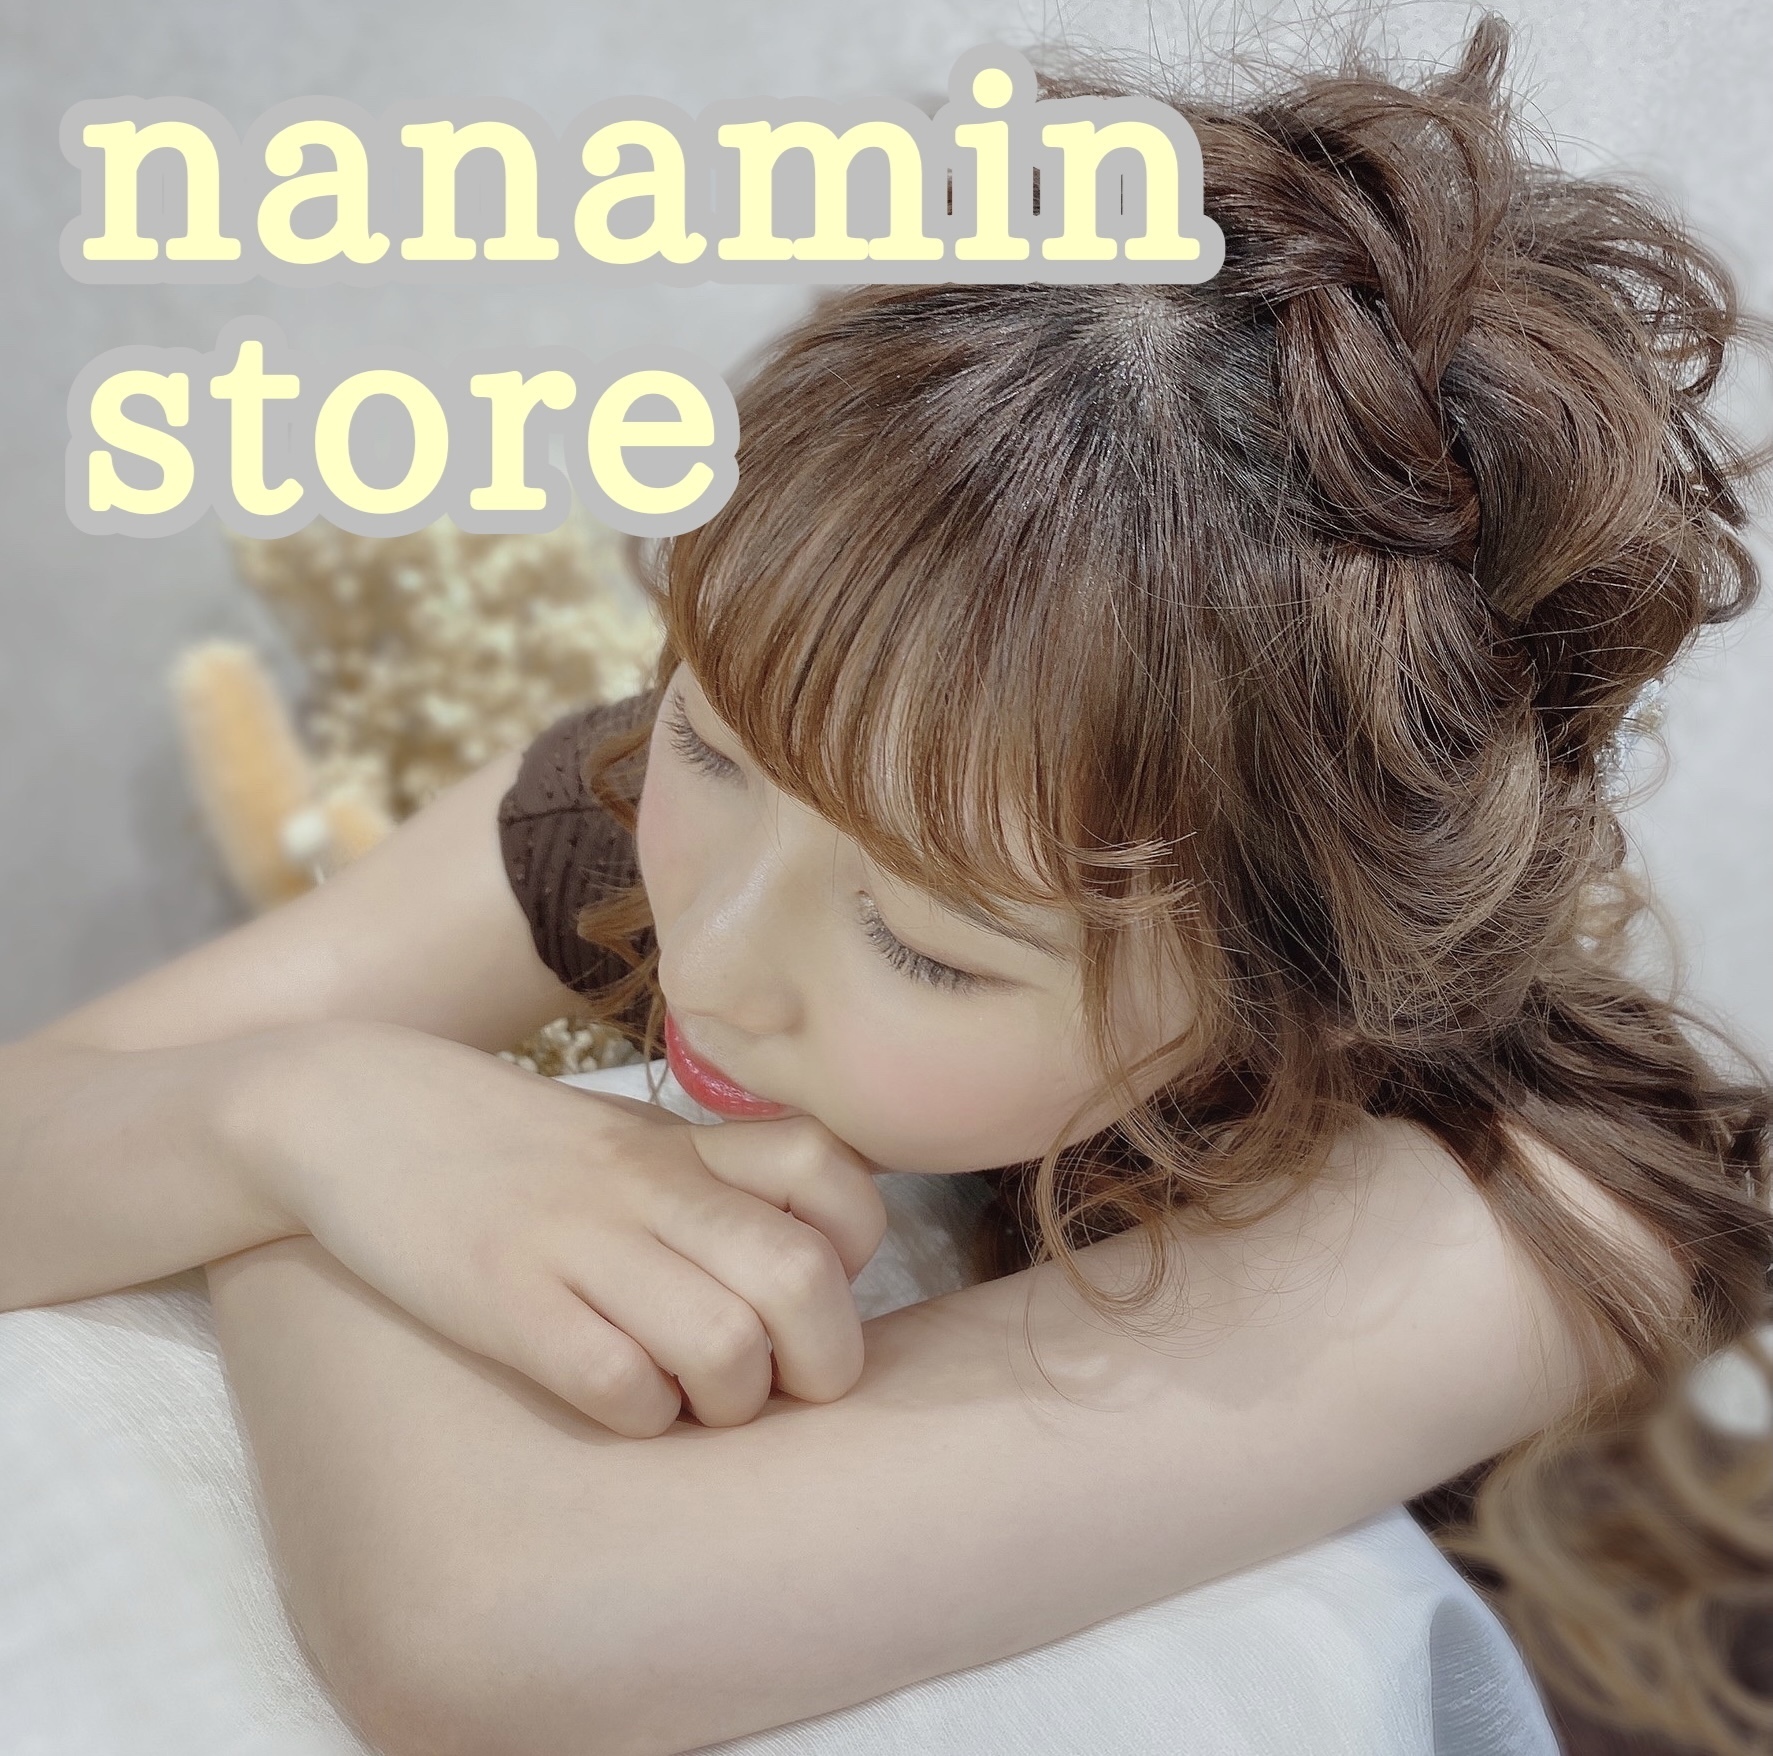 nanamin store